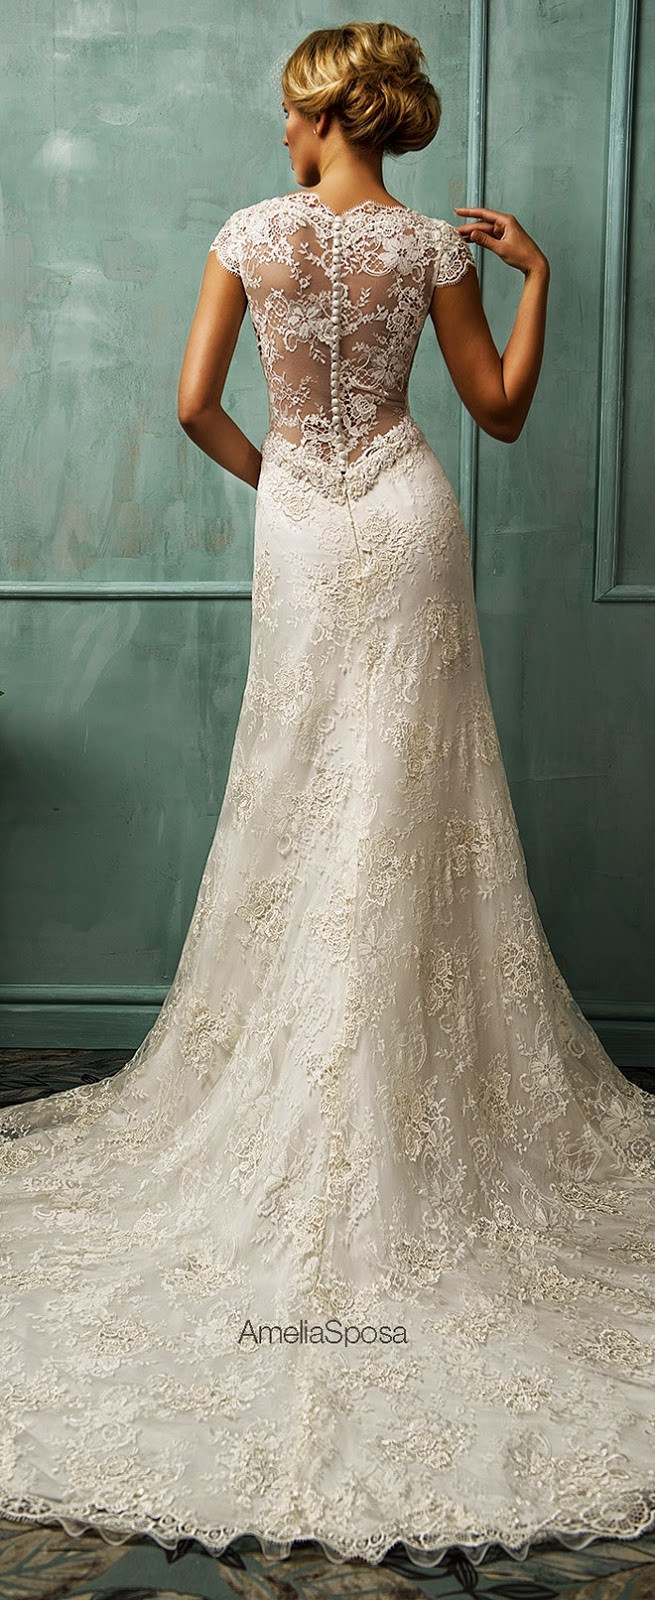 Lace Wedding Gowns Pinterest
 Amelia Sposa 2014 Wedding Dresses Belle The Magazine